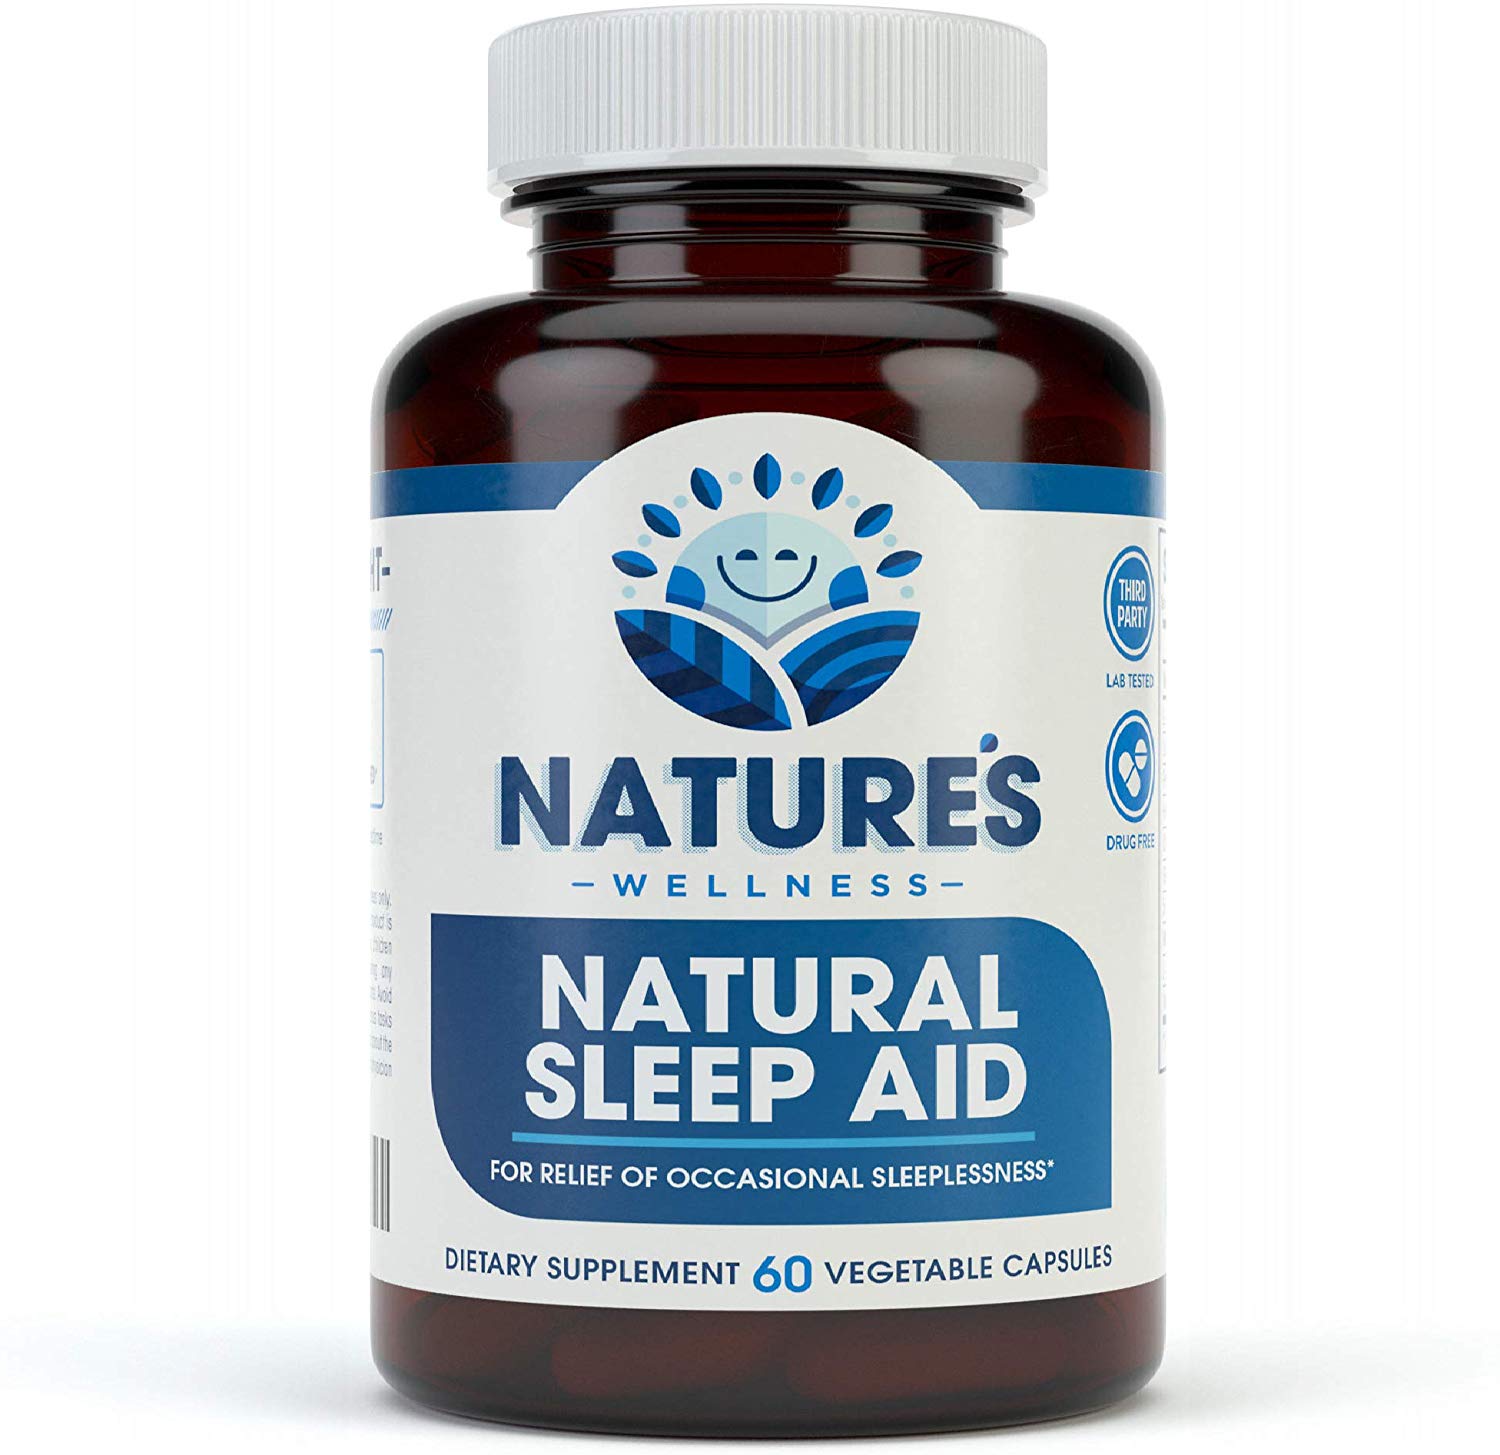 2. Nature's Wellness Natural Sleeping Aid